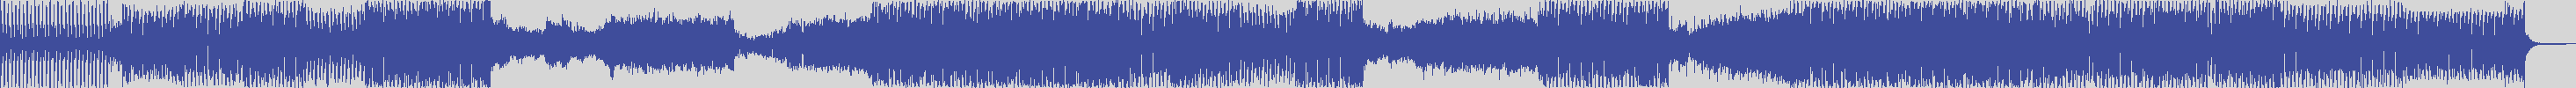 definitiva [DEF010] Wem-j. - La Rondine [DJ Cutry & Marchino DJ Floor Rmx] audio wave form